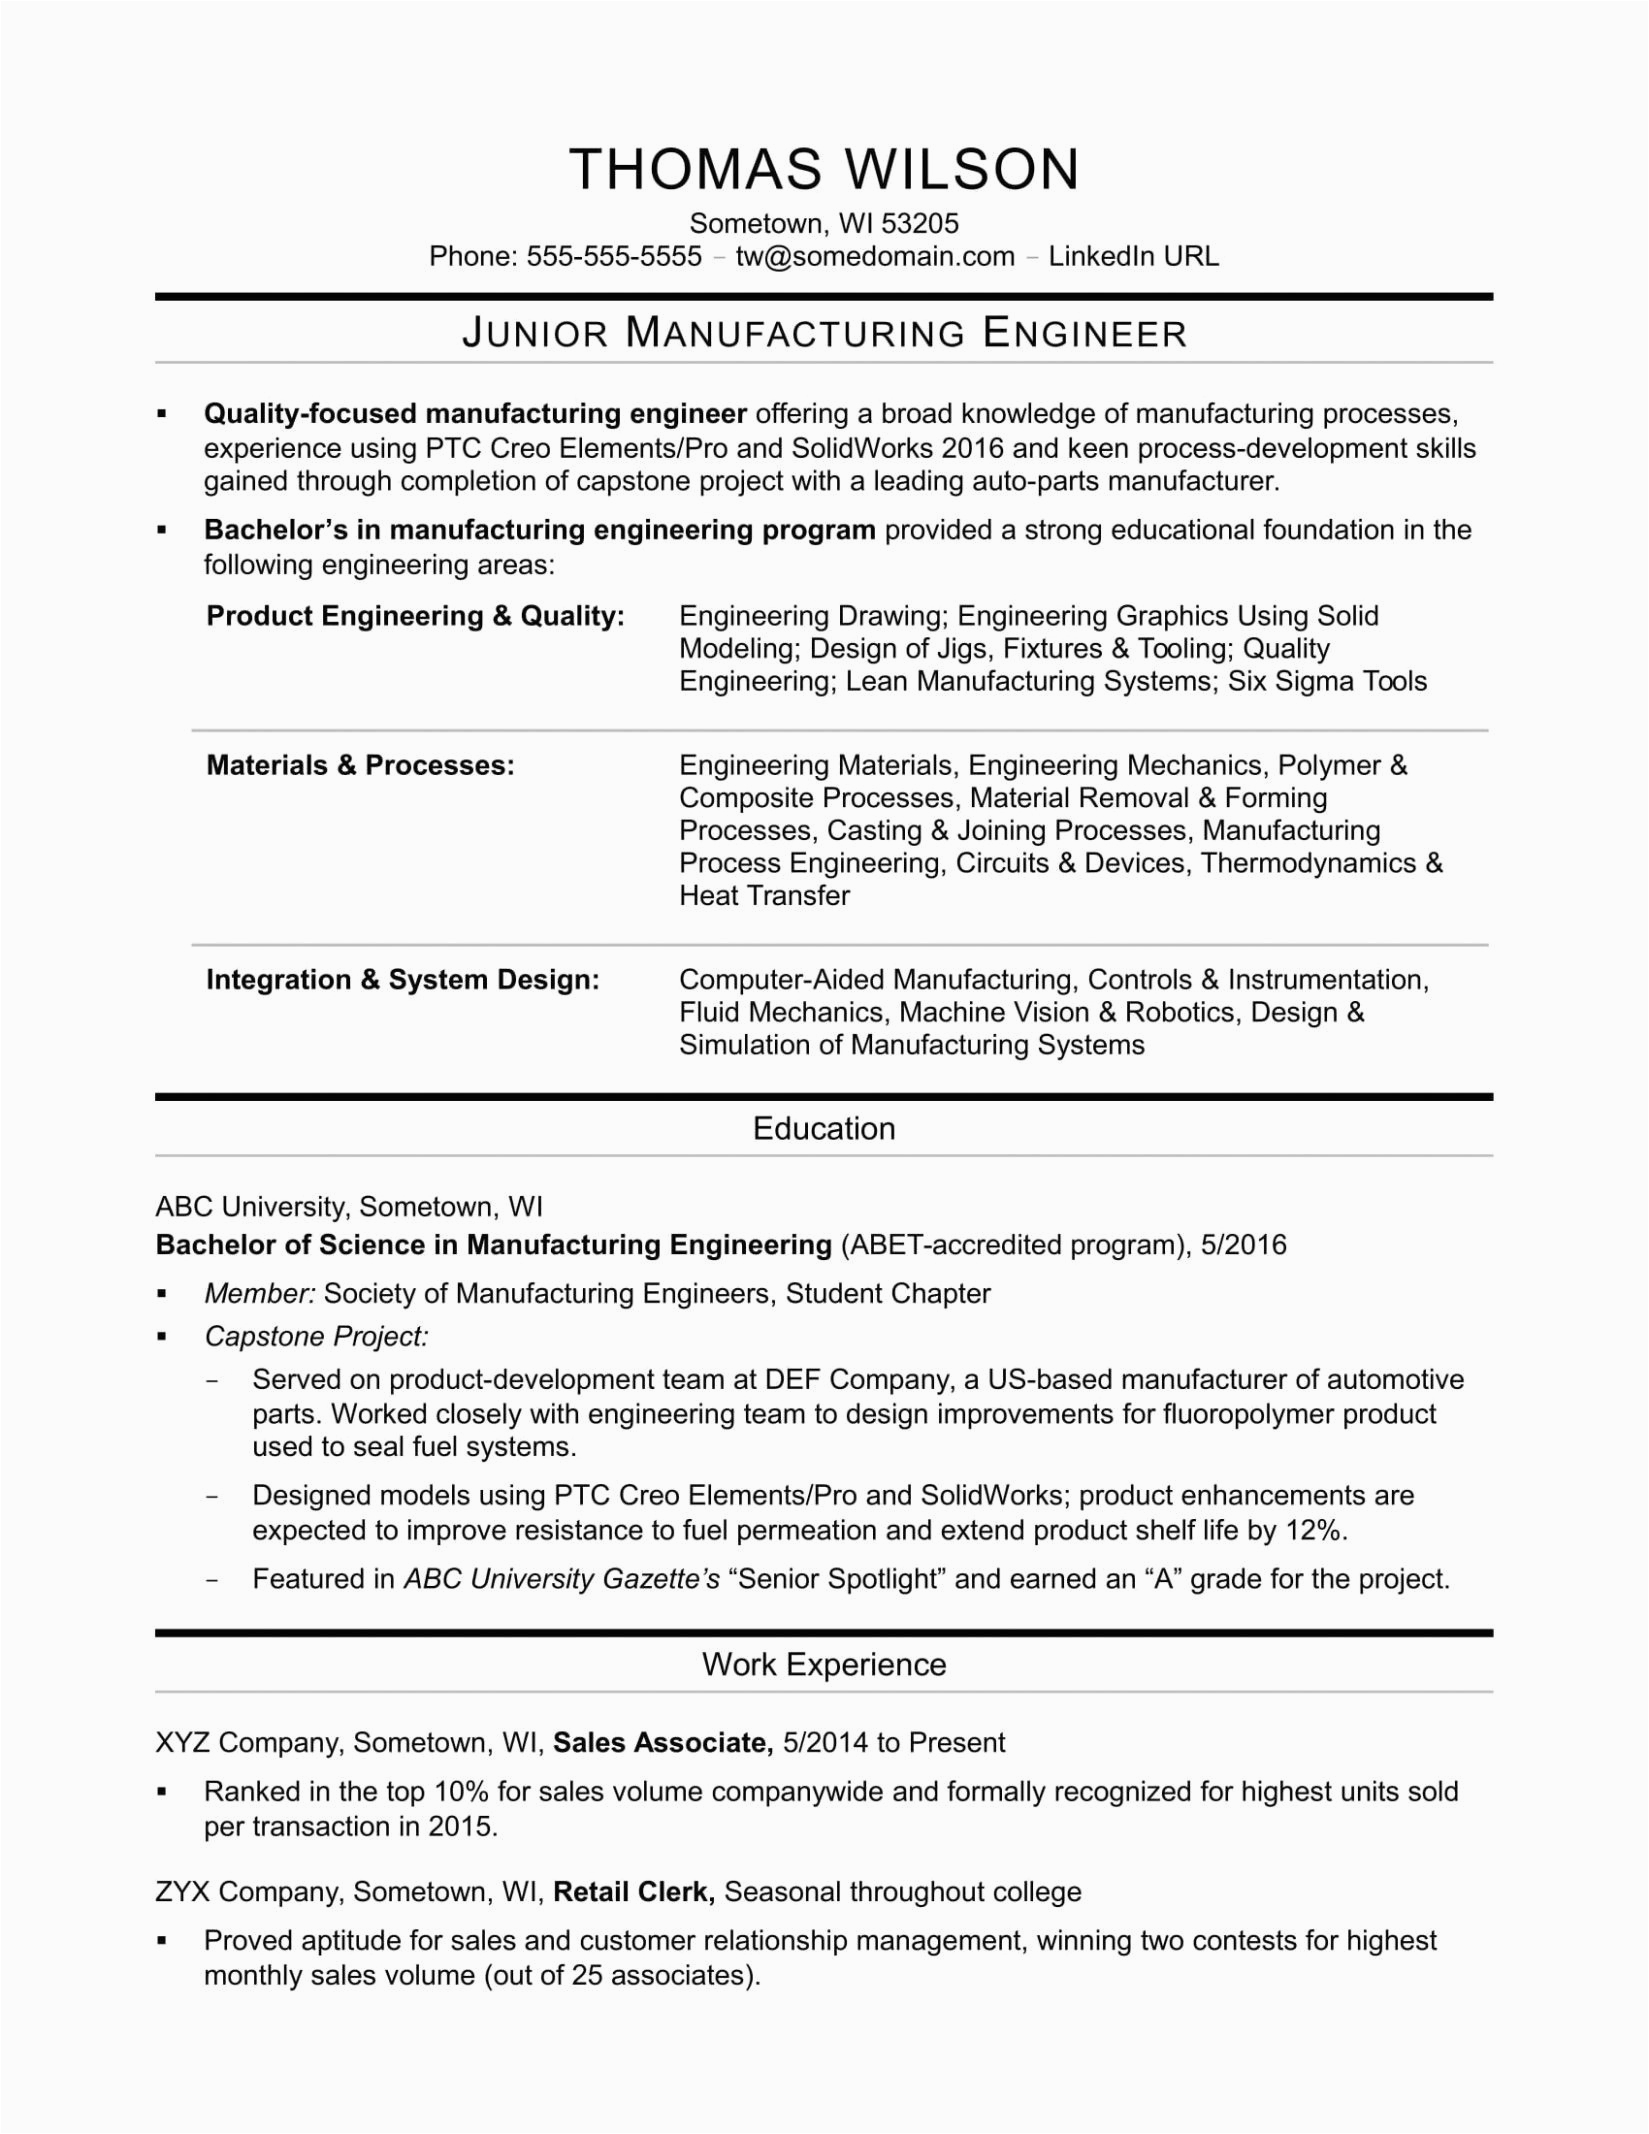 Sample Resume for Paint Shop Engineer 15 Instrumentation Engineer Resume